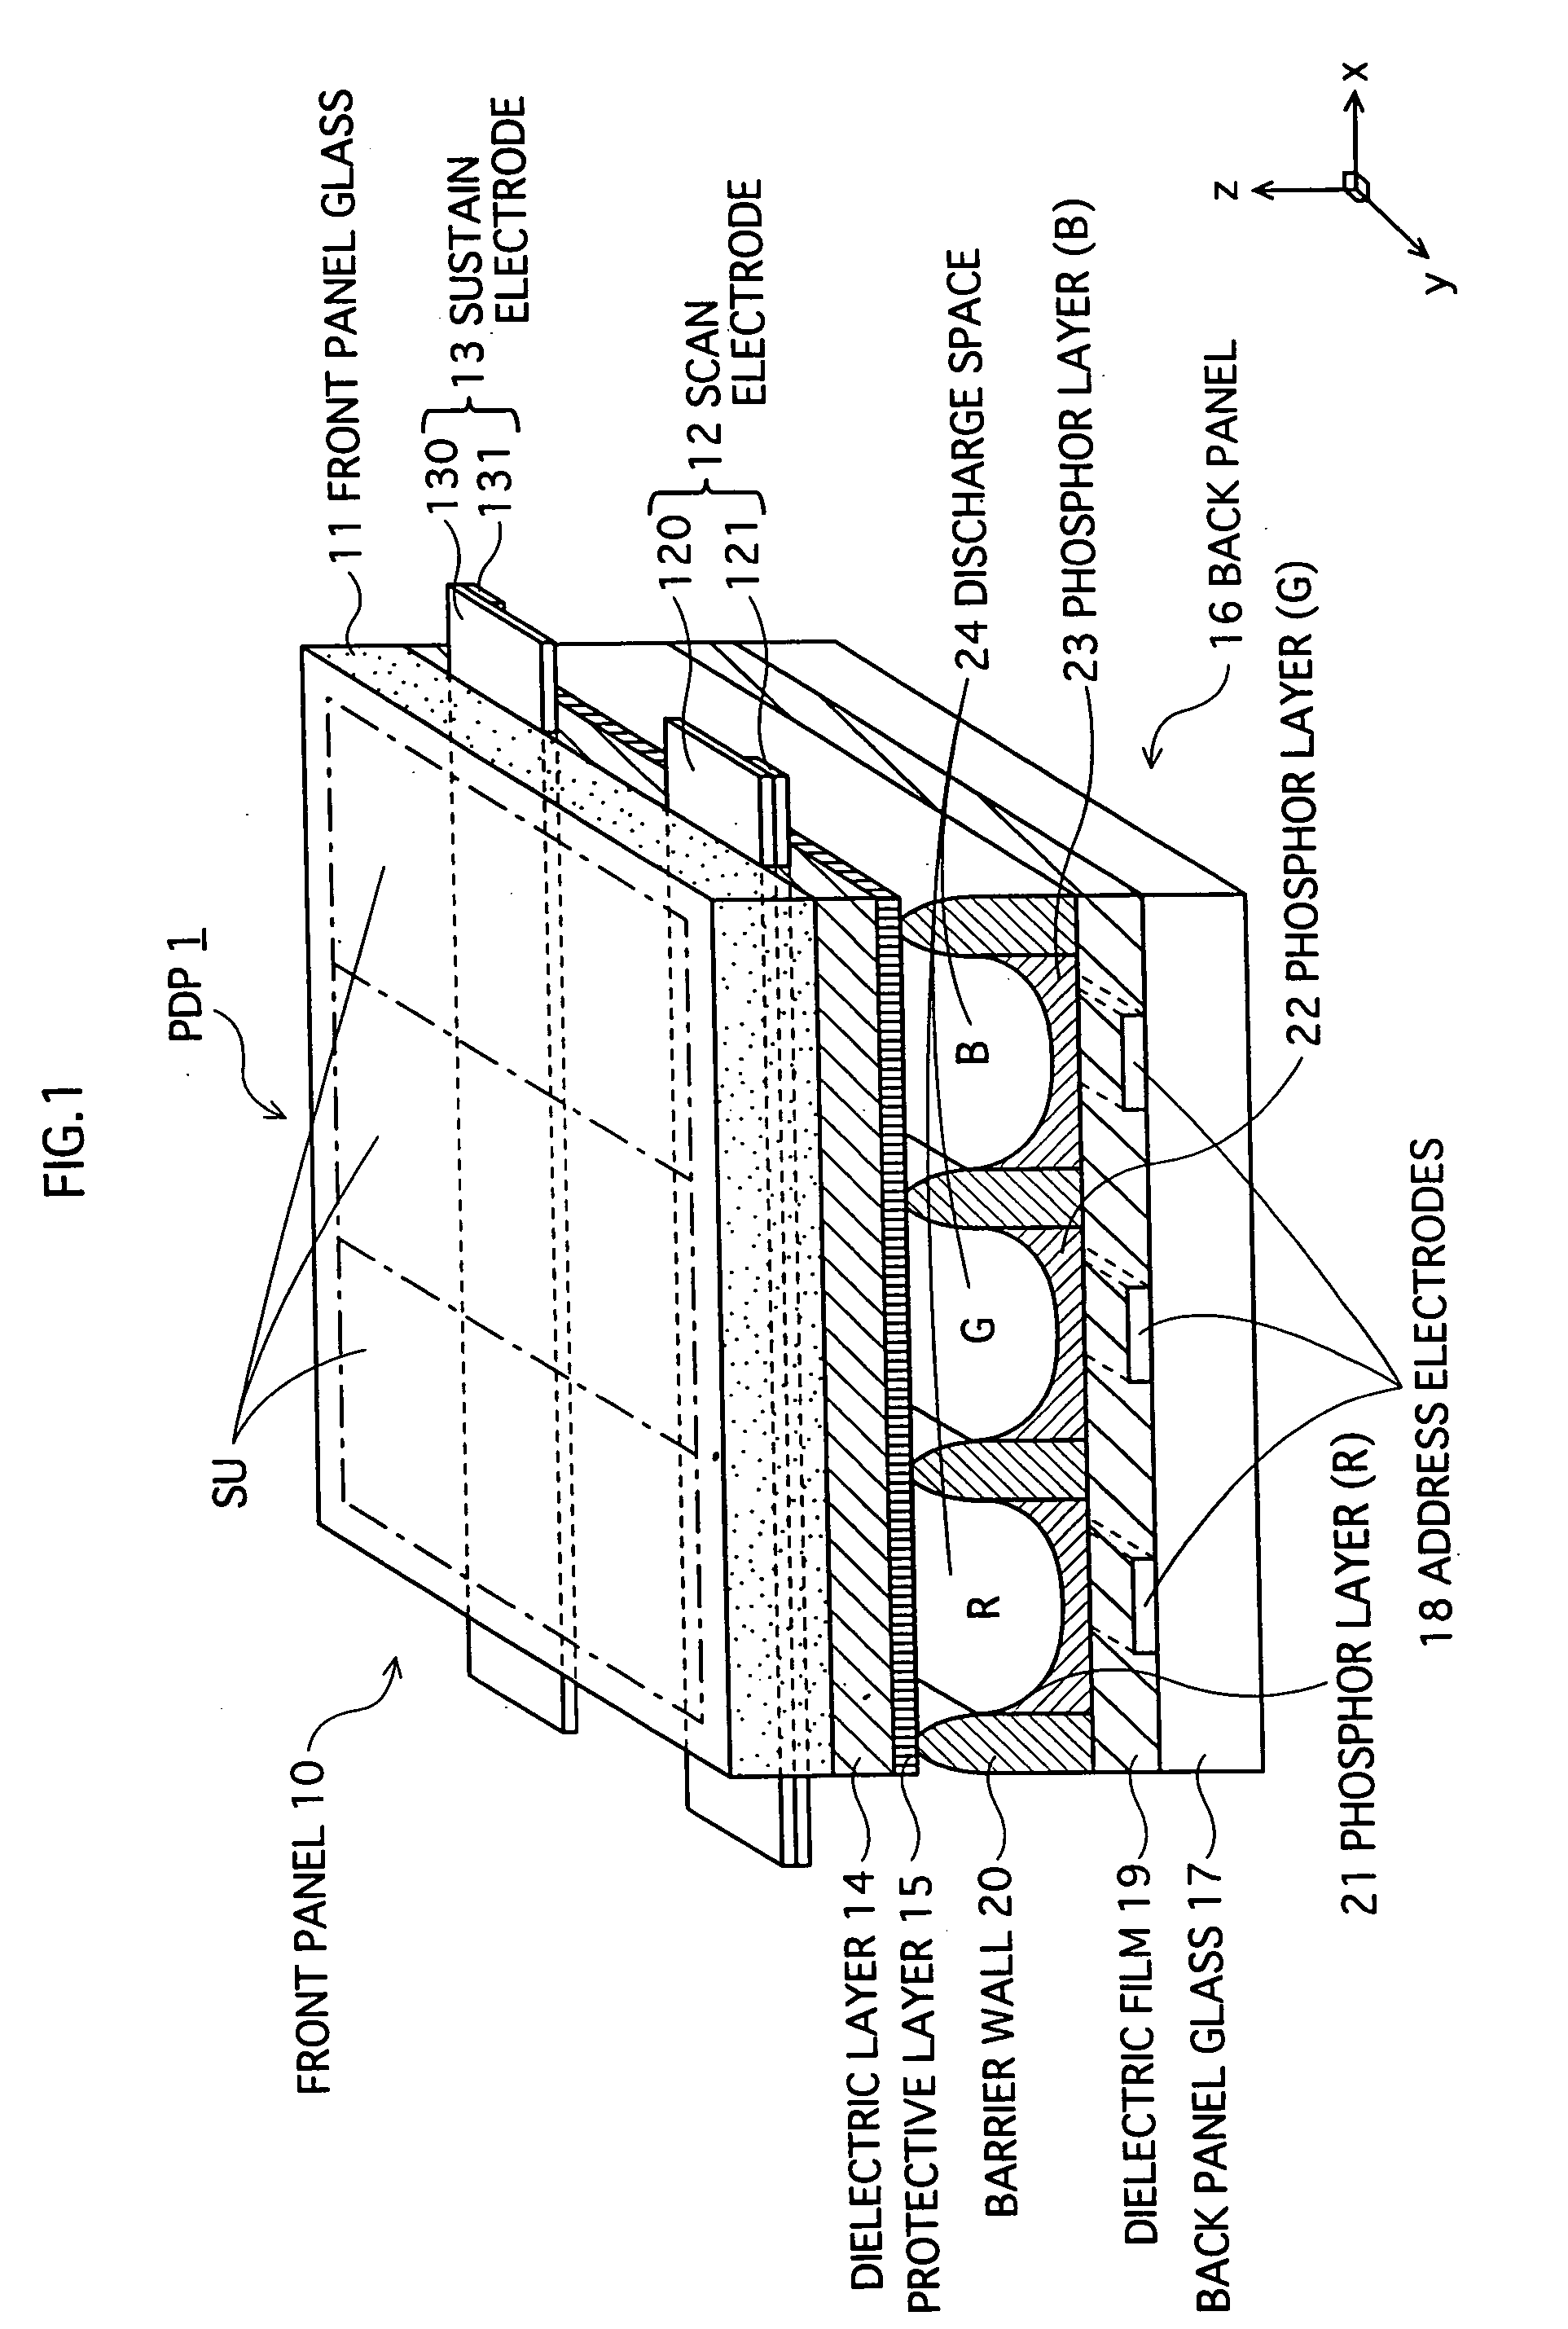 Plasma display panel and method for manaufacturing same